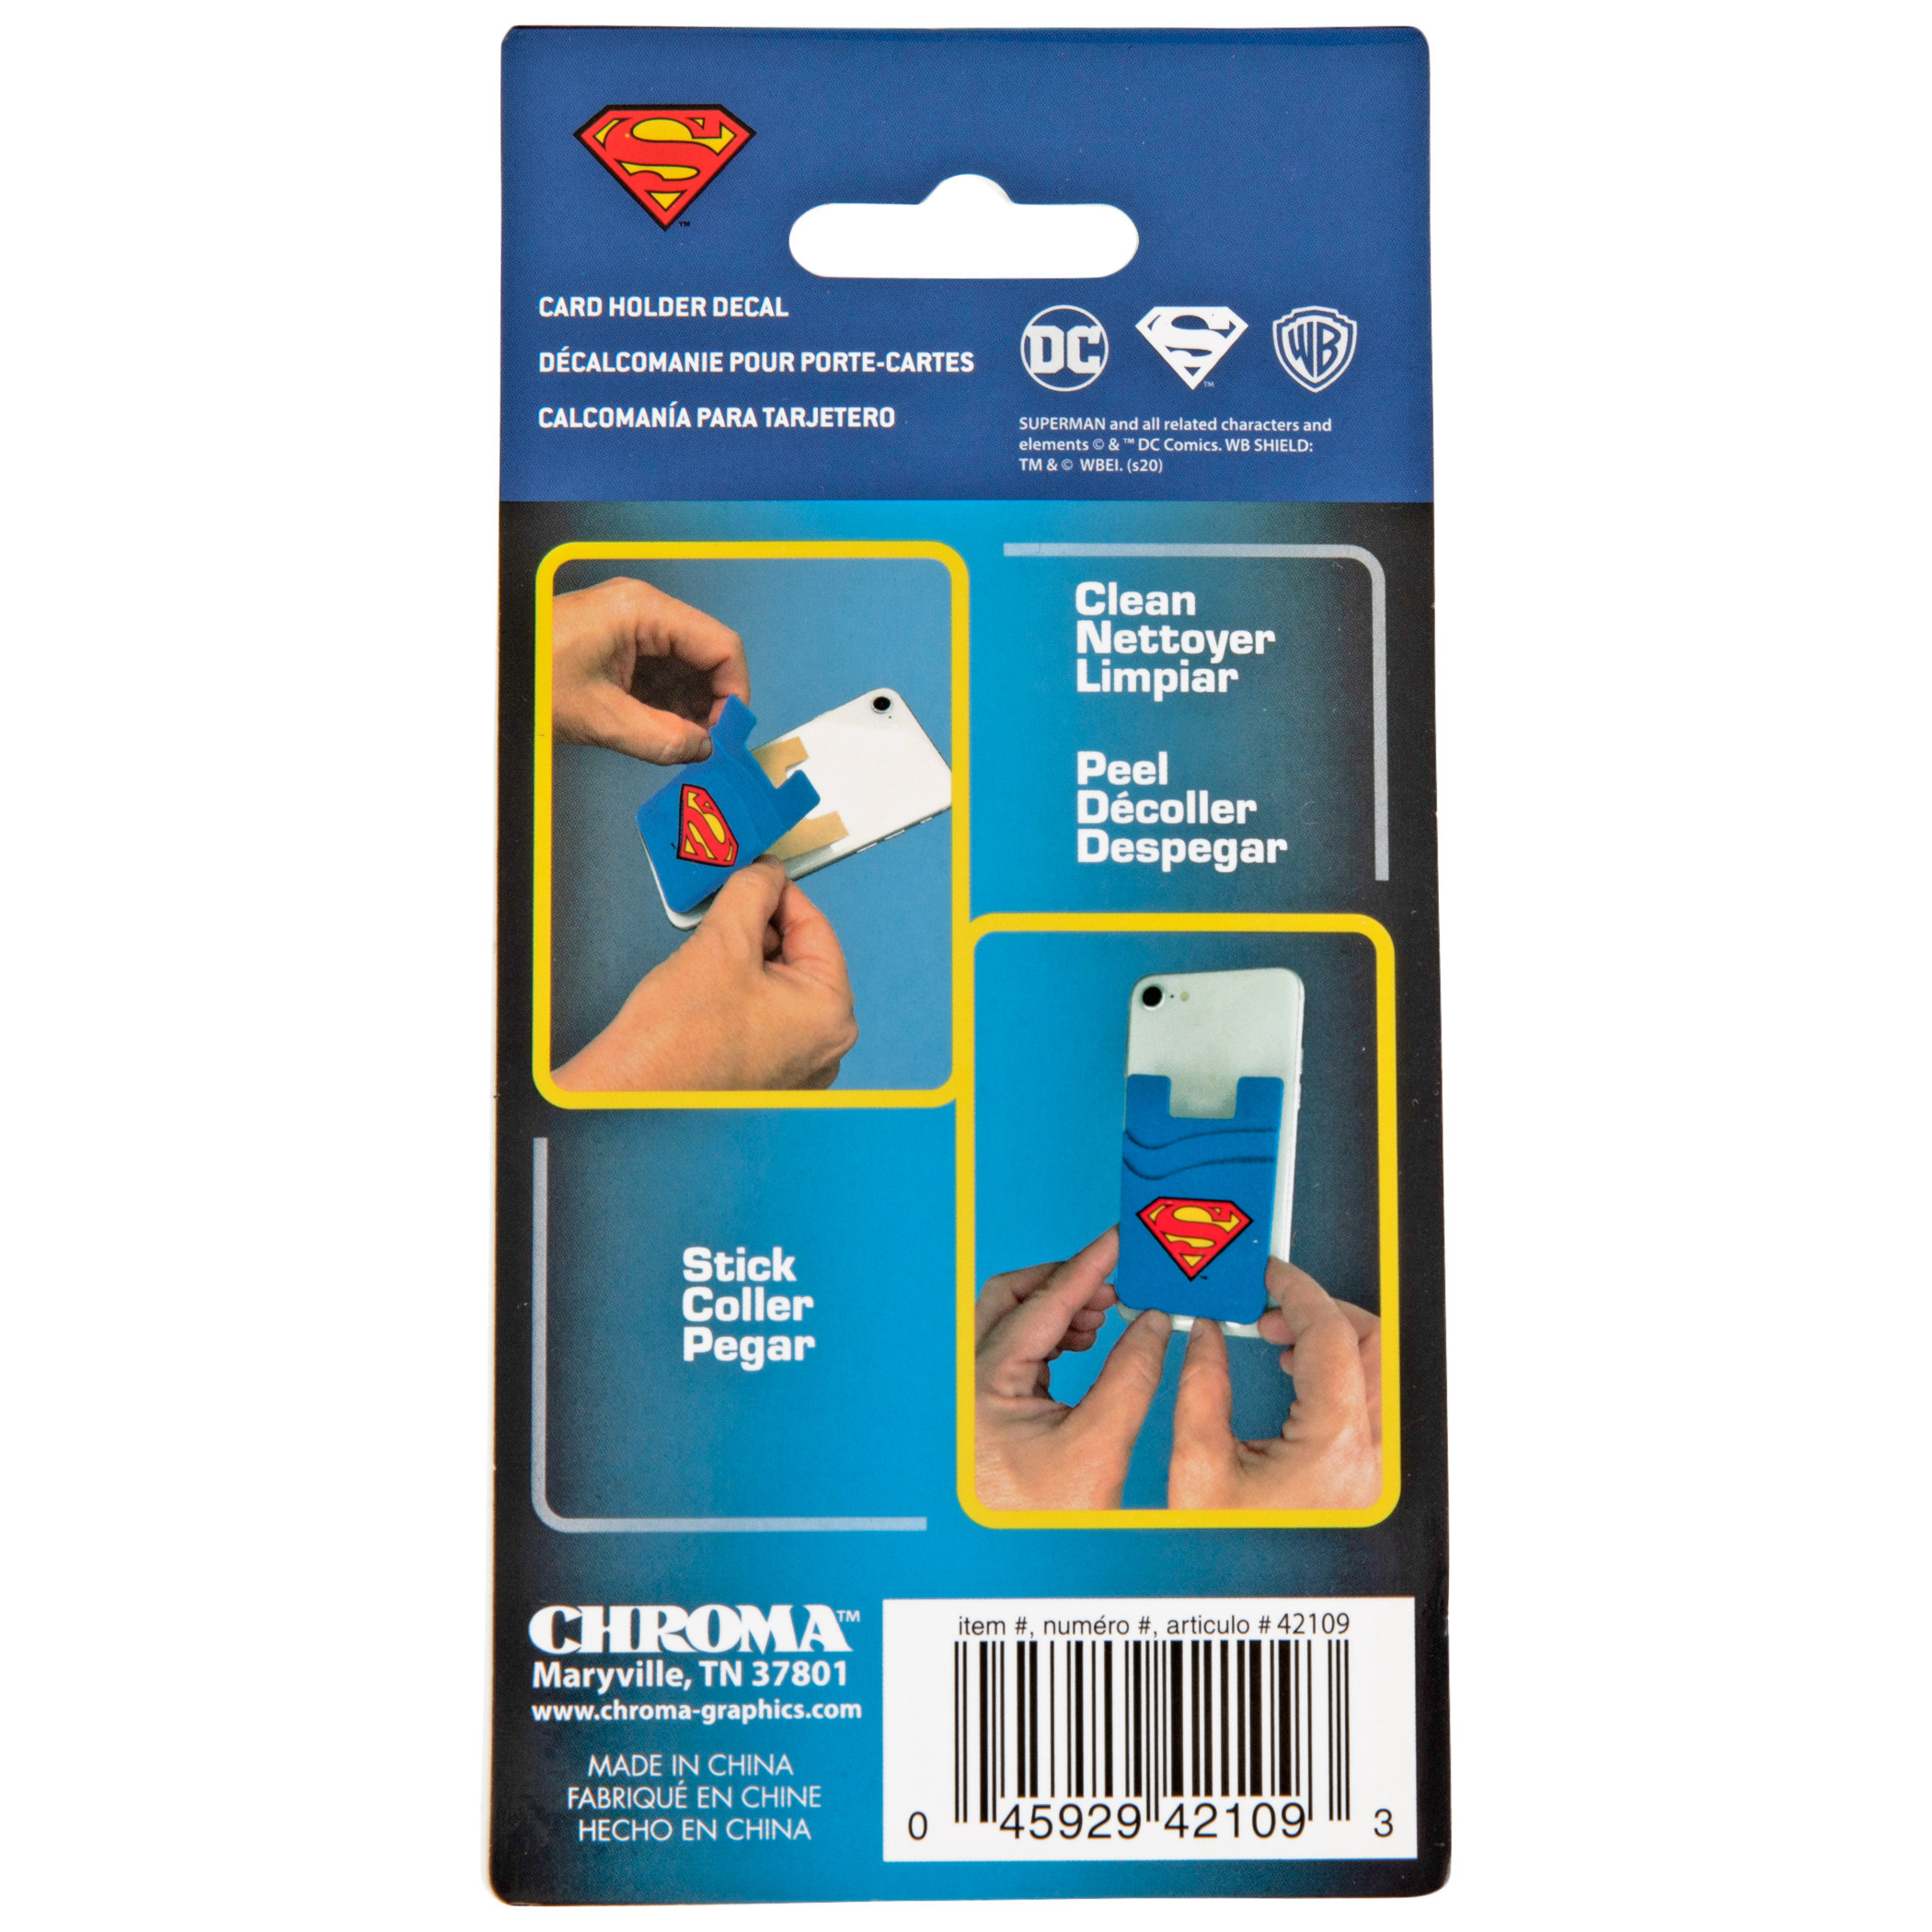 DC Comics Superman Logo Phone Card and License Holder